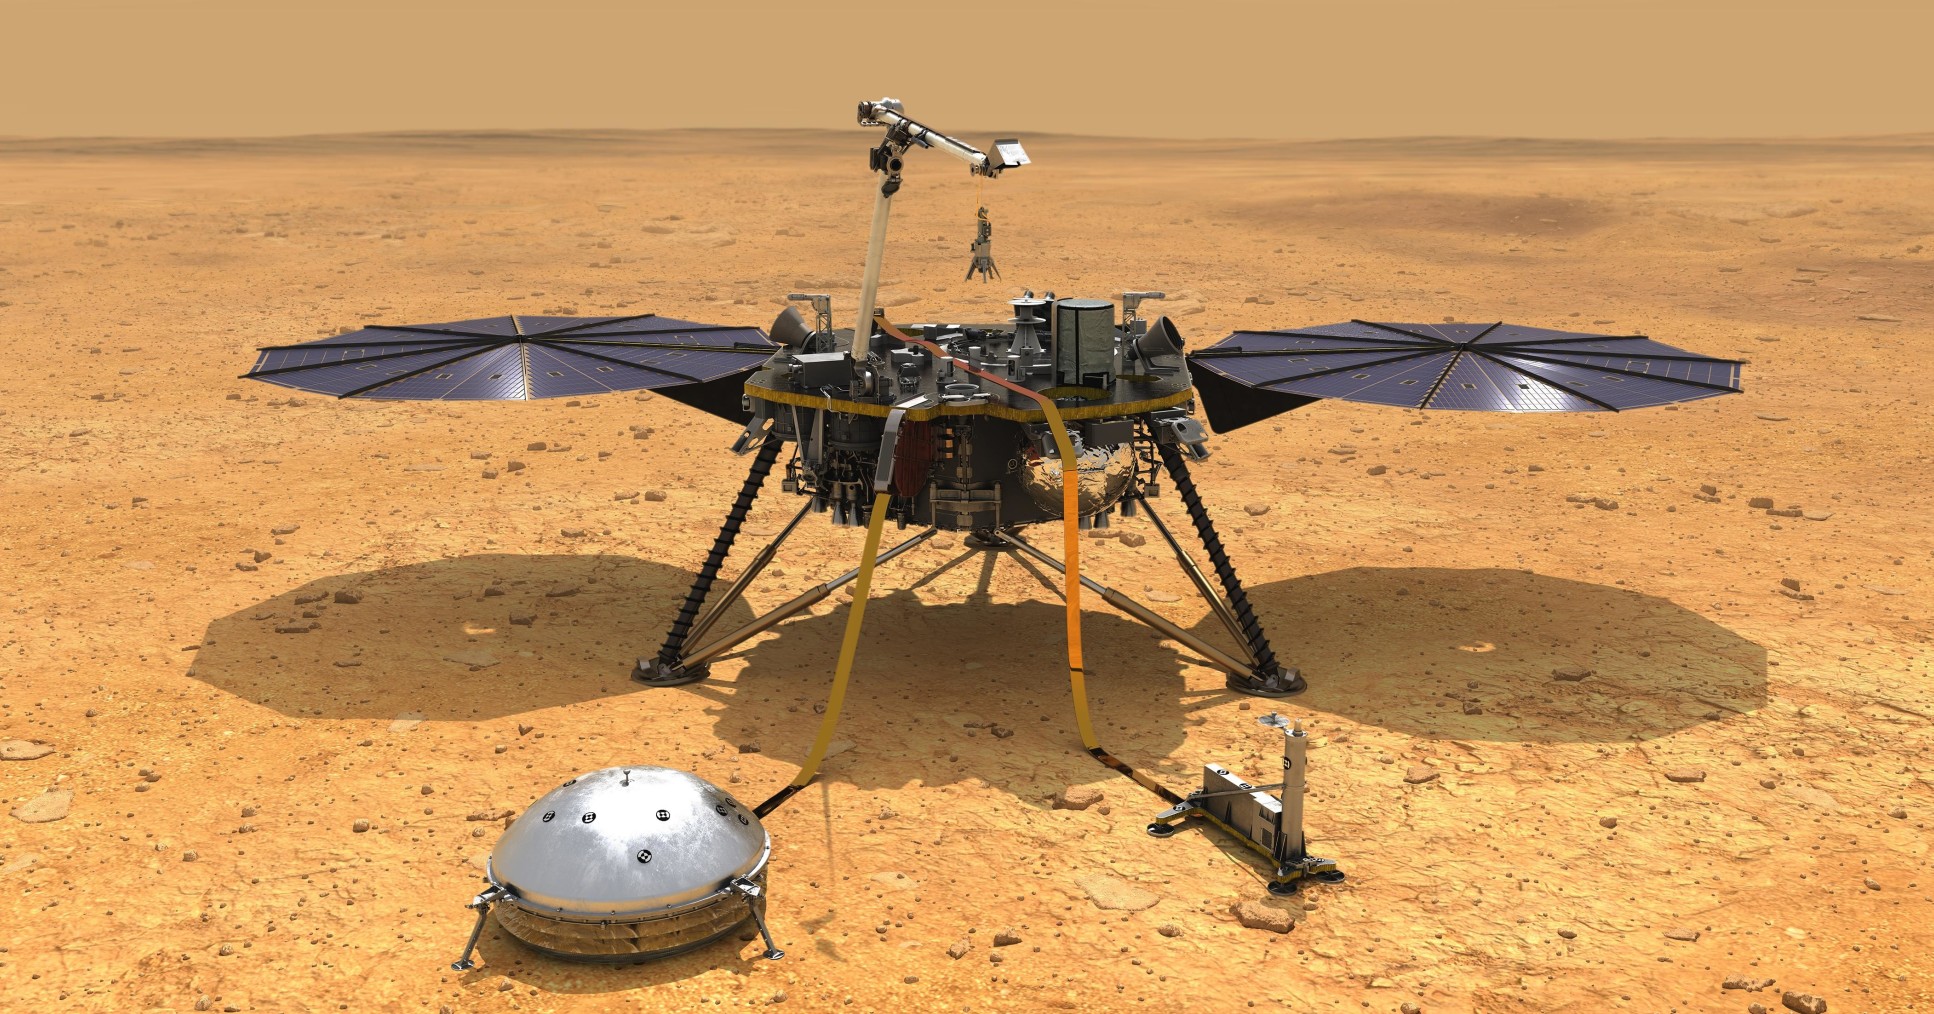 Image of the InSight lander on Mars